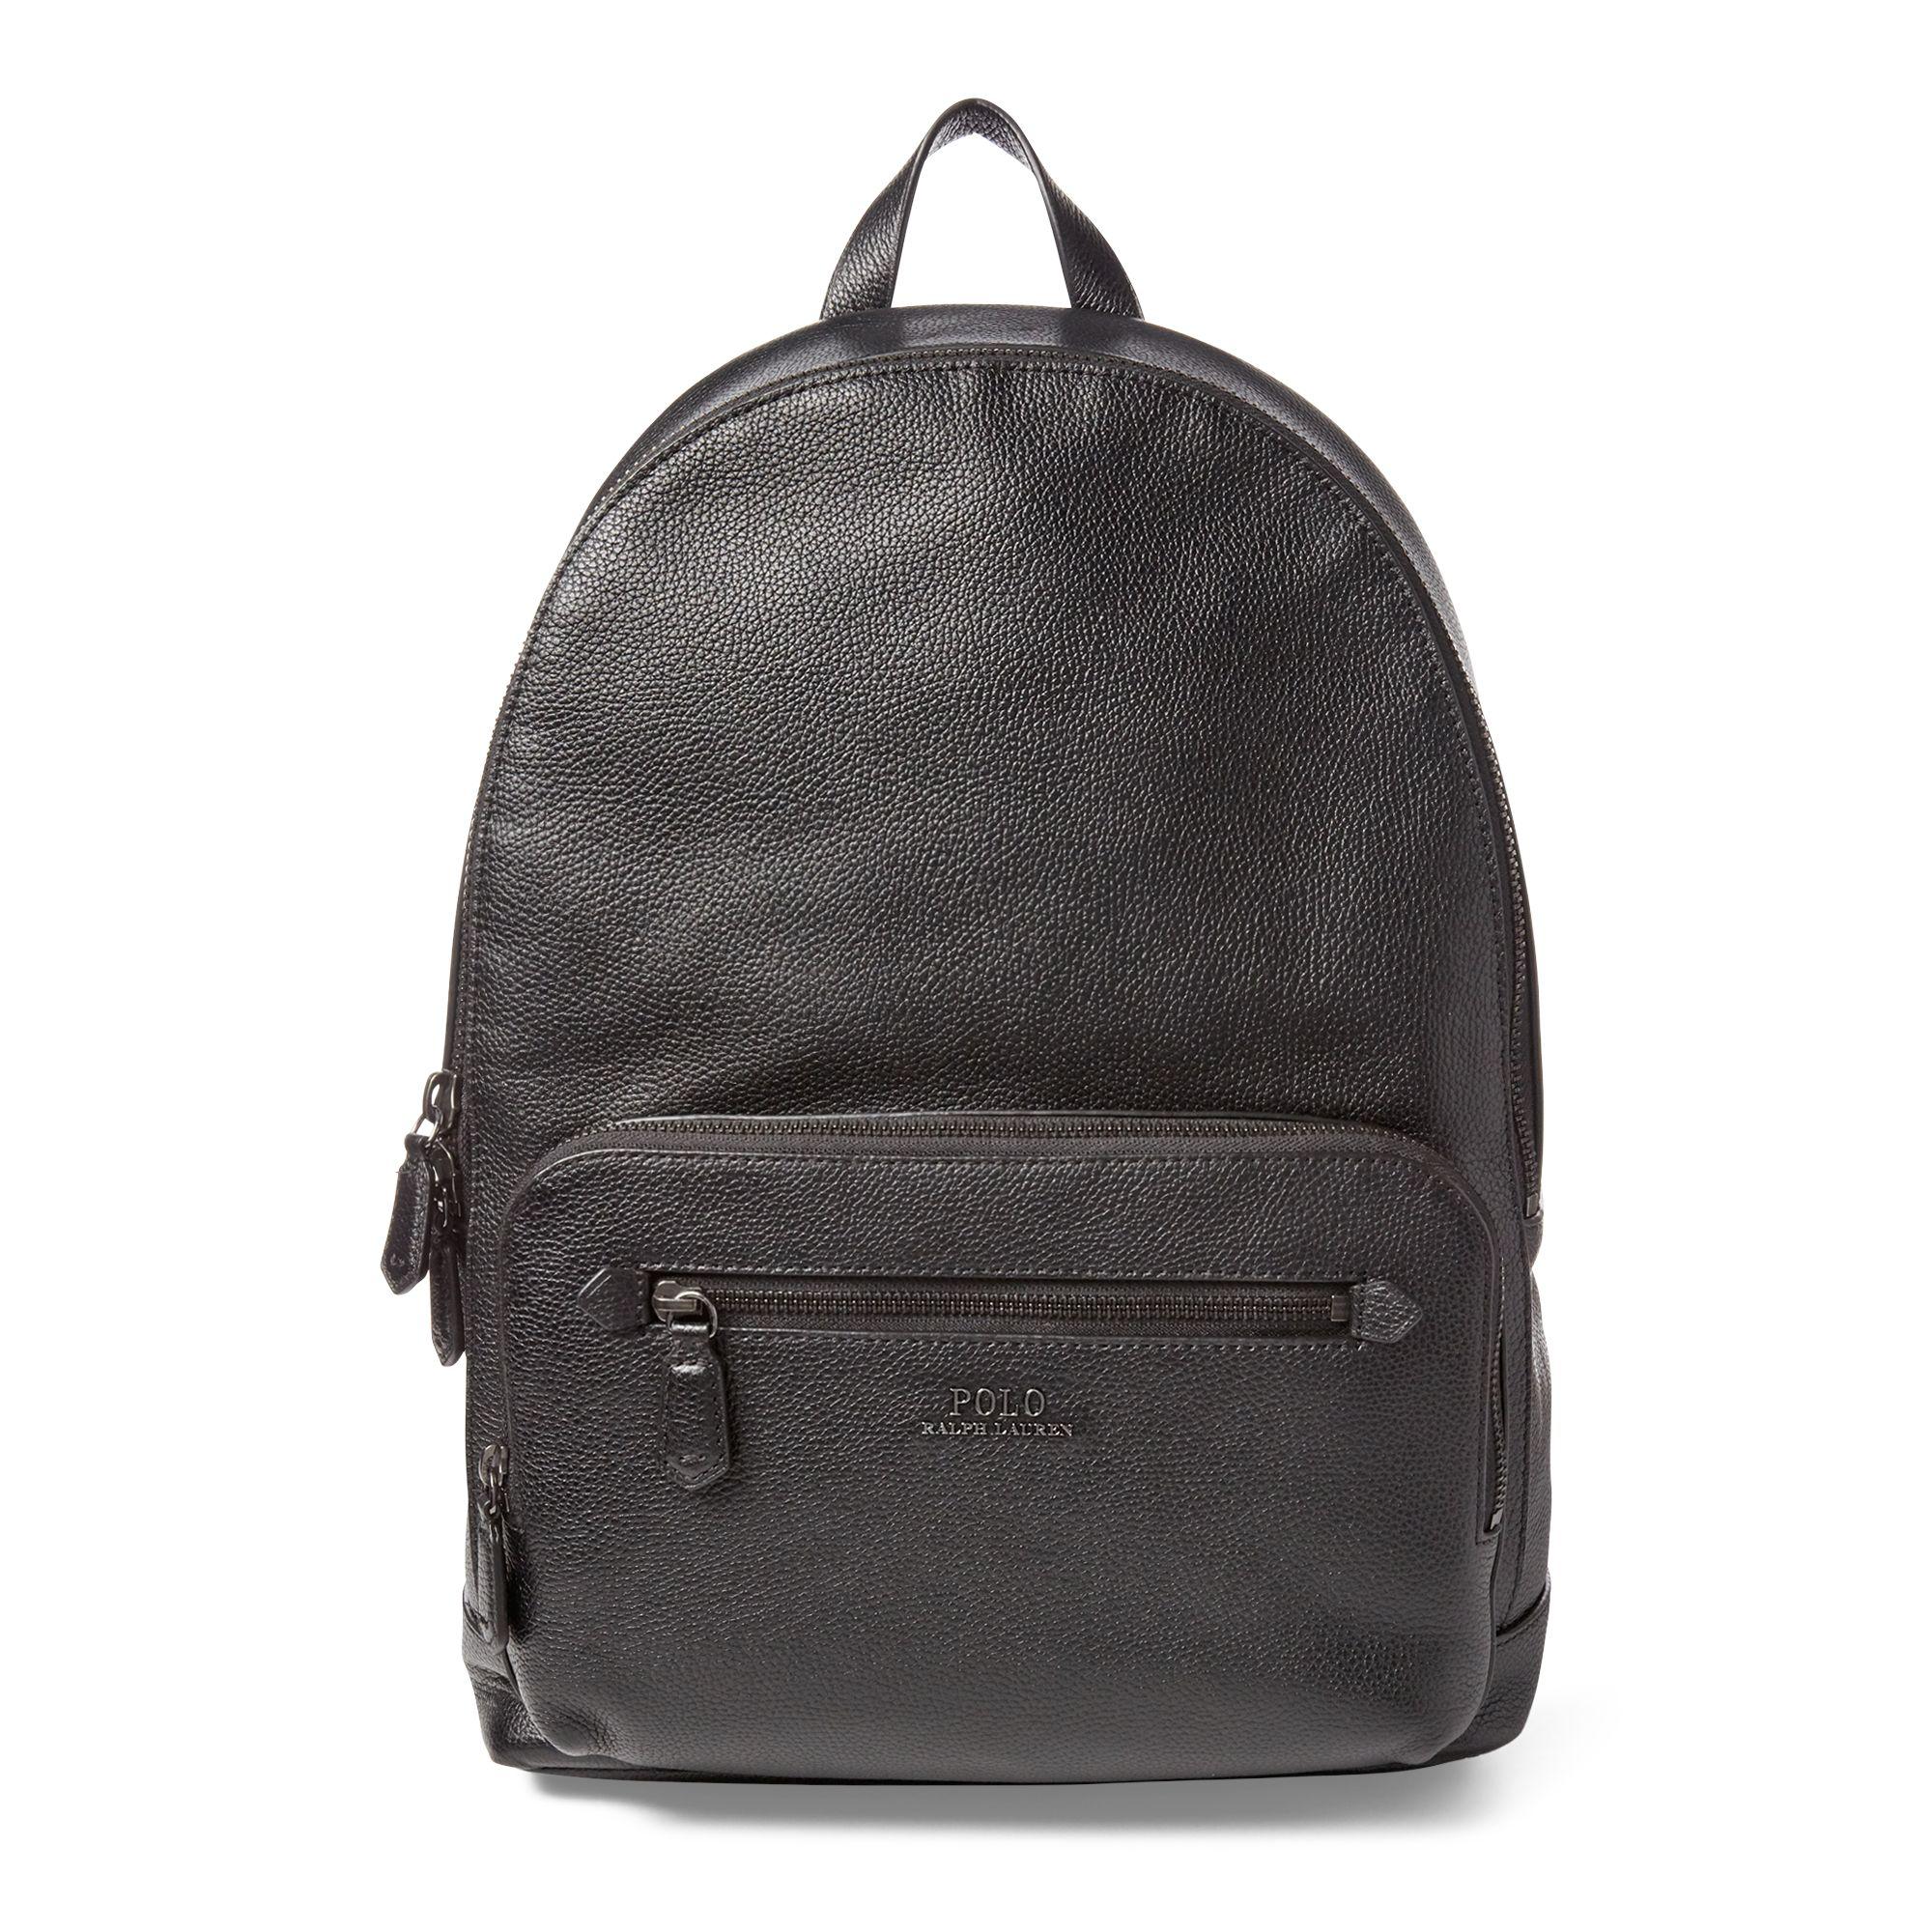 Polo Ralph Lauren Men's Leather Backpack - Black